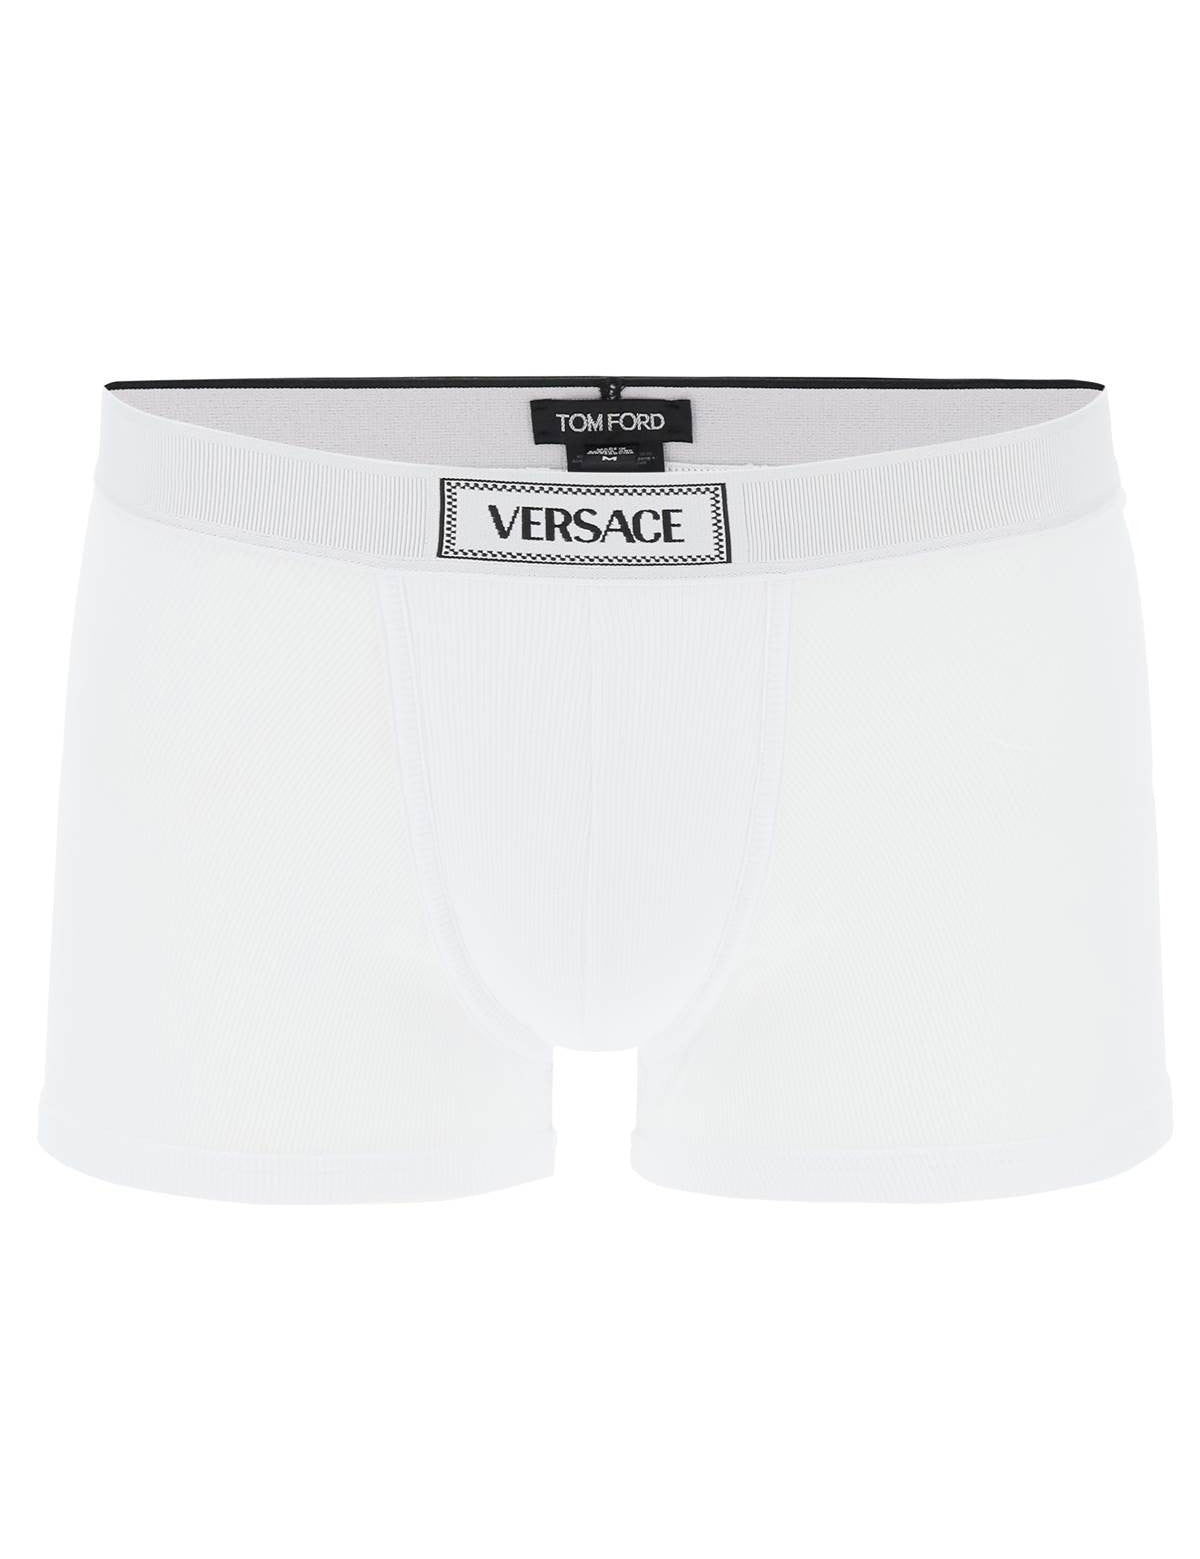 intimate-boxer-shorts-with-logo-band.jpg